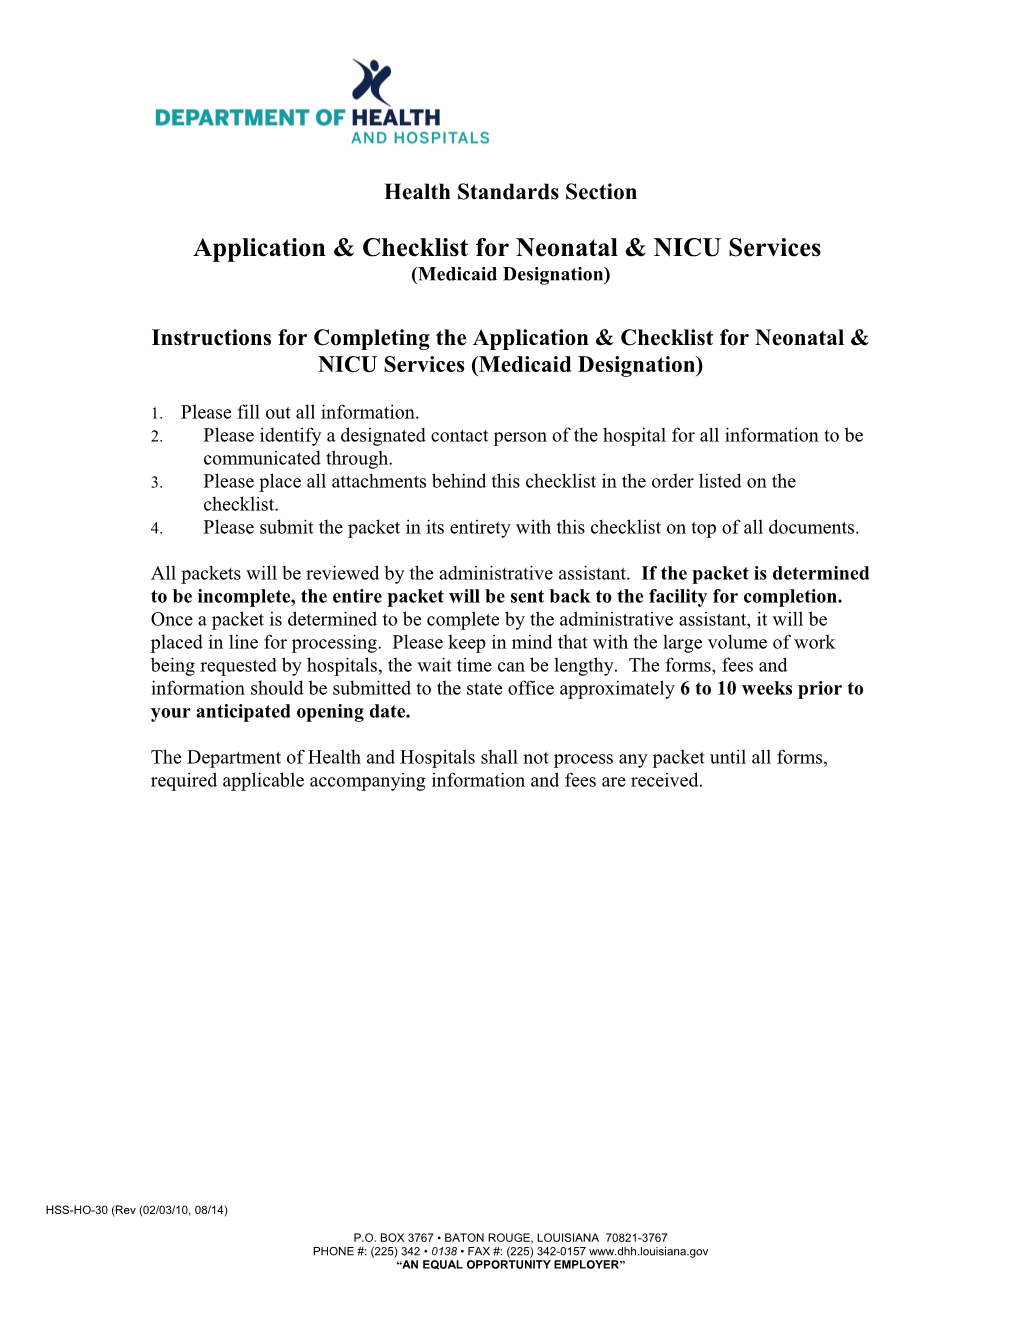 Application & Checklist for Neonatal & NICU Services (Medicaid Designation)